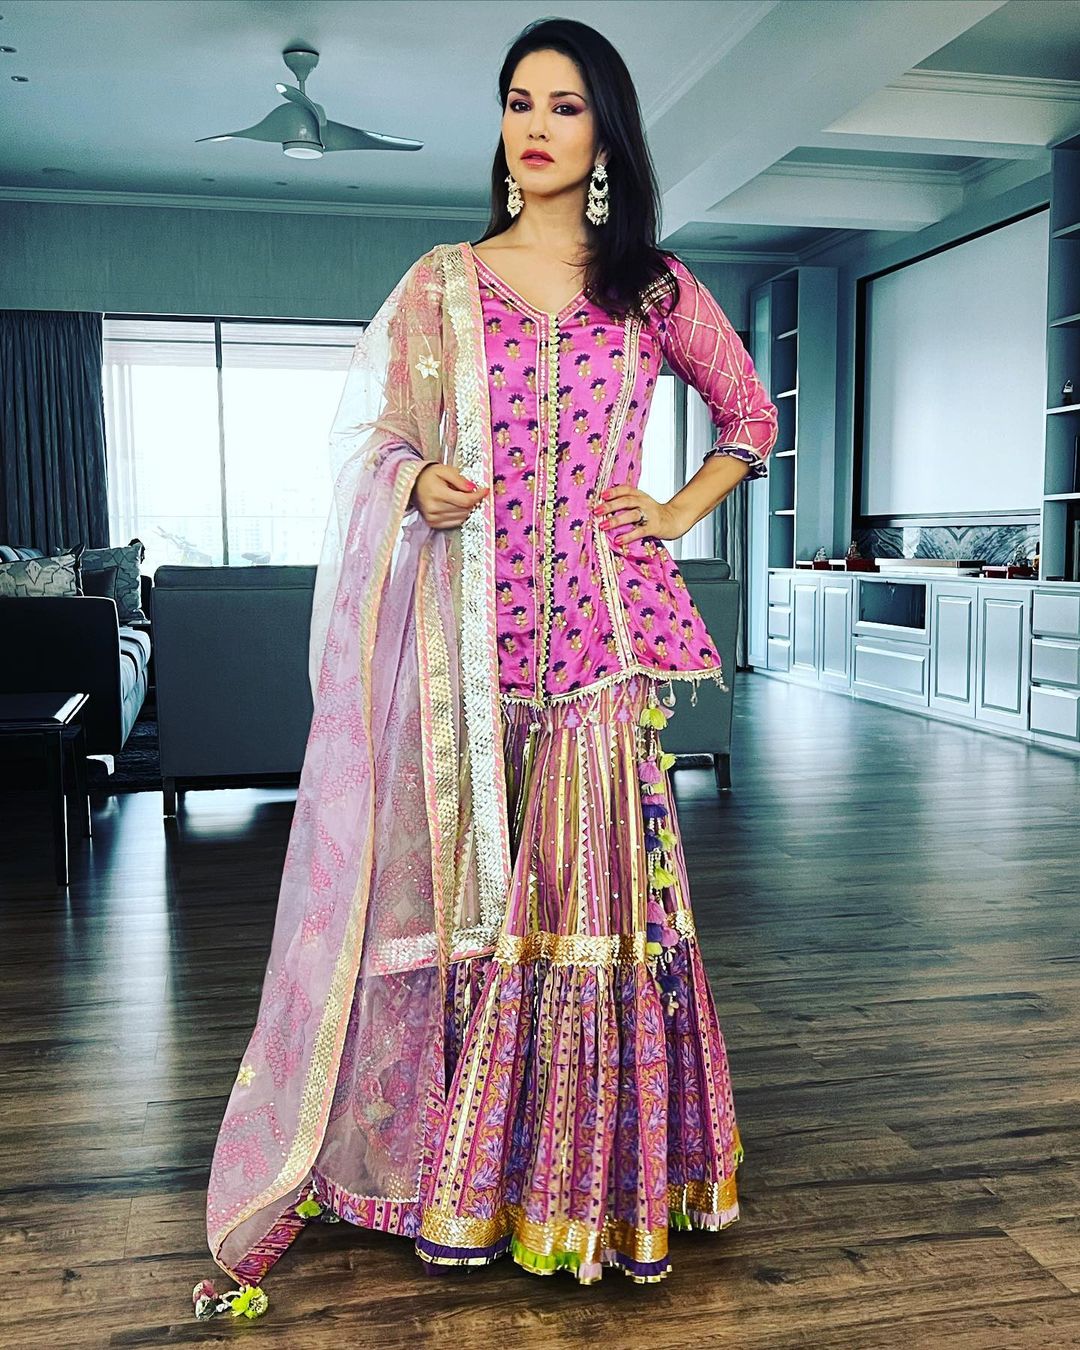 Sunny Leone in Ethnic Dress